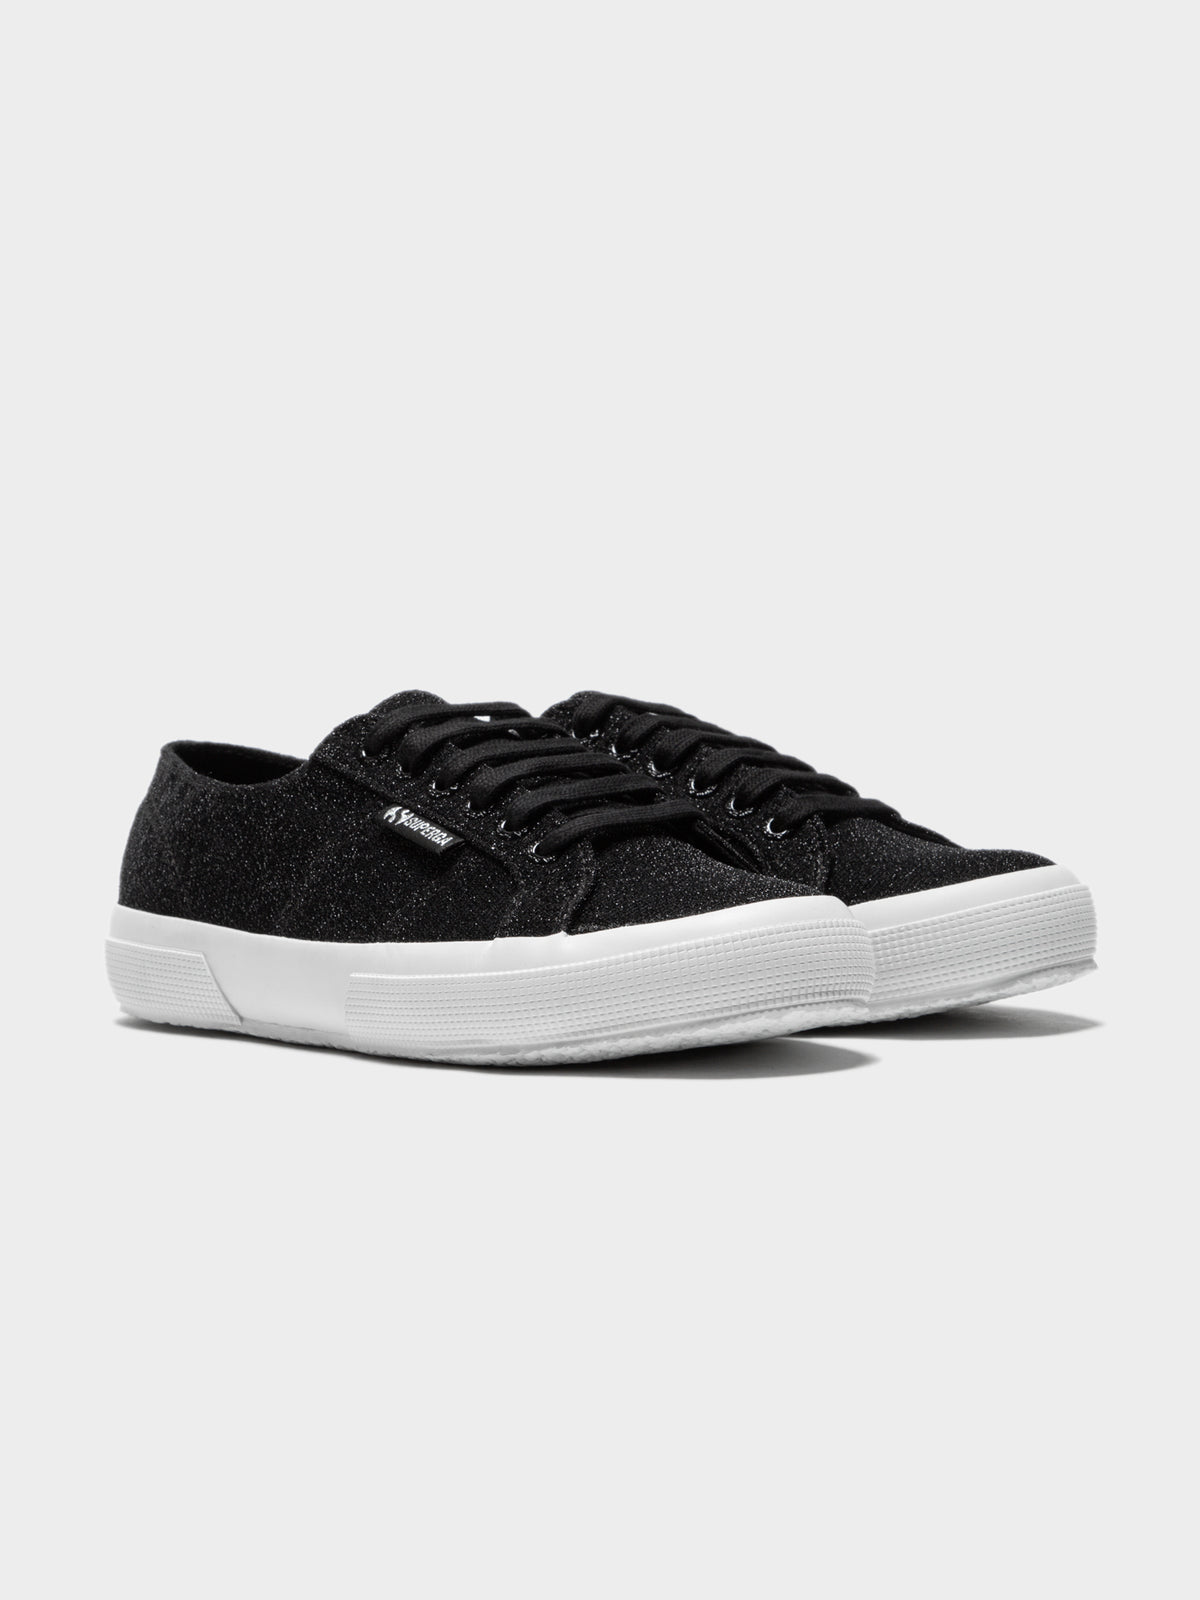 2750 Jersey Lurex Sneakers in Black